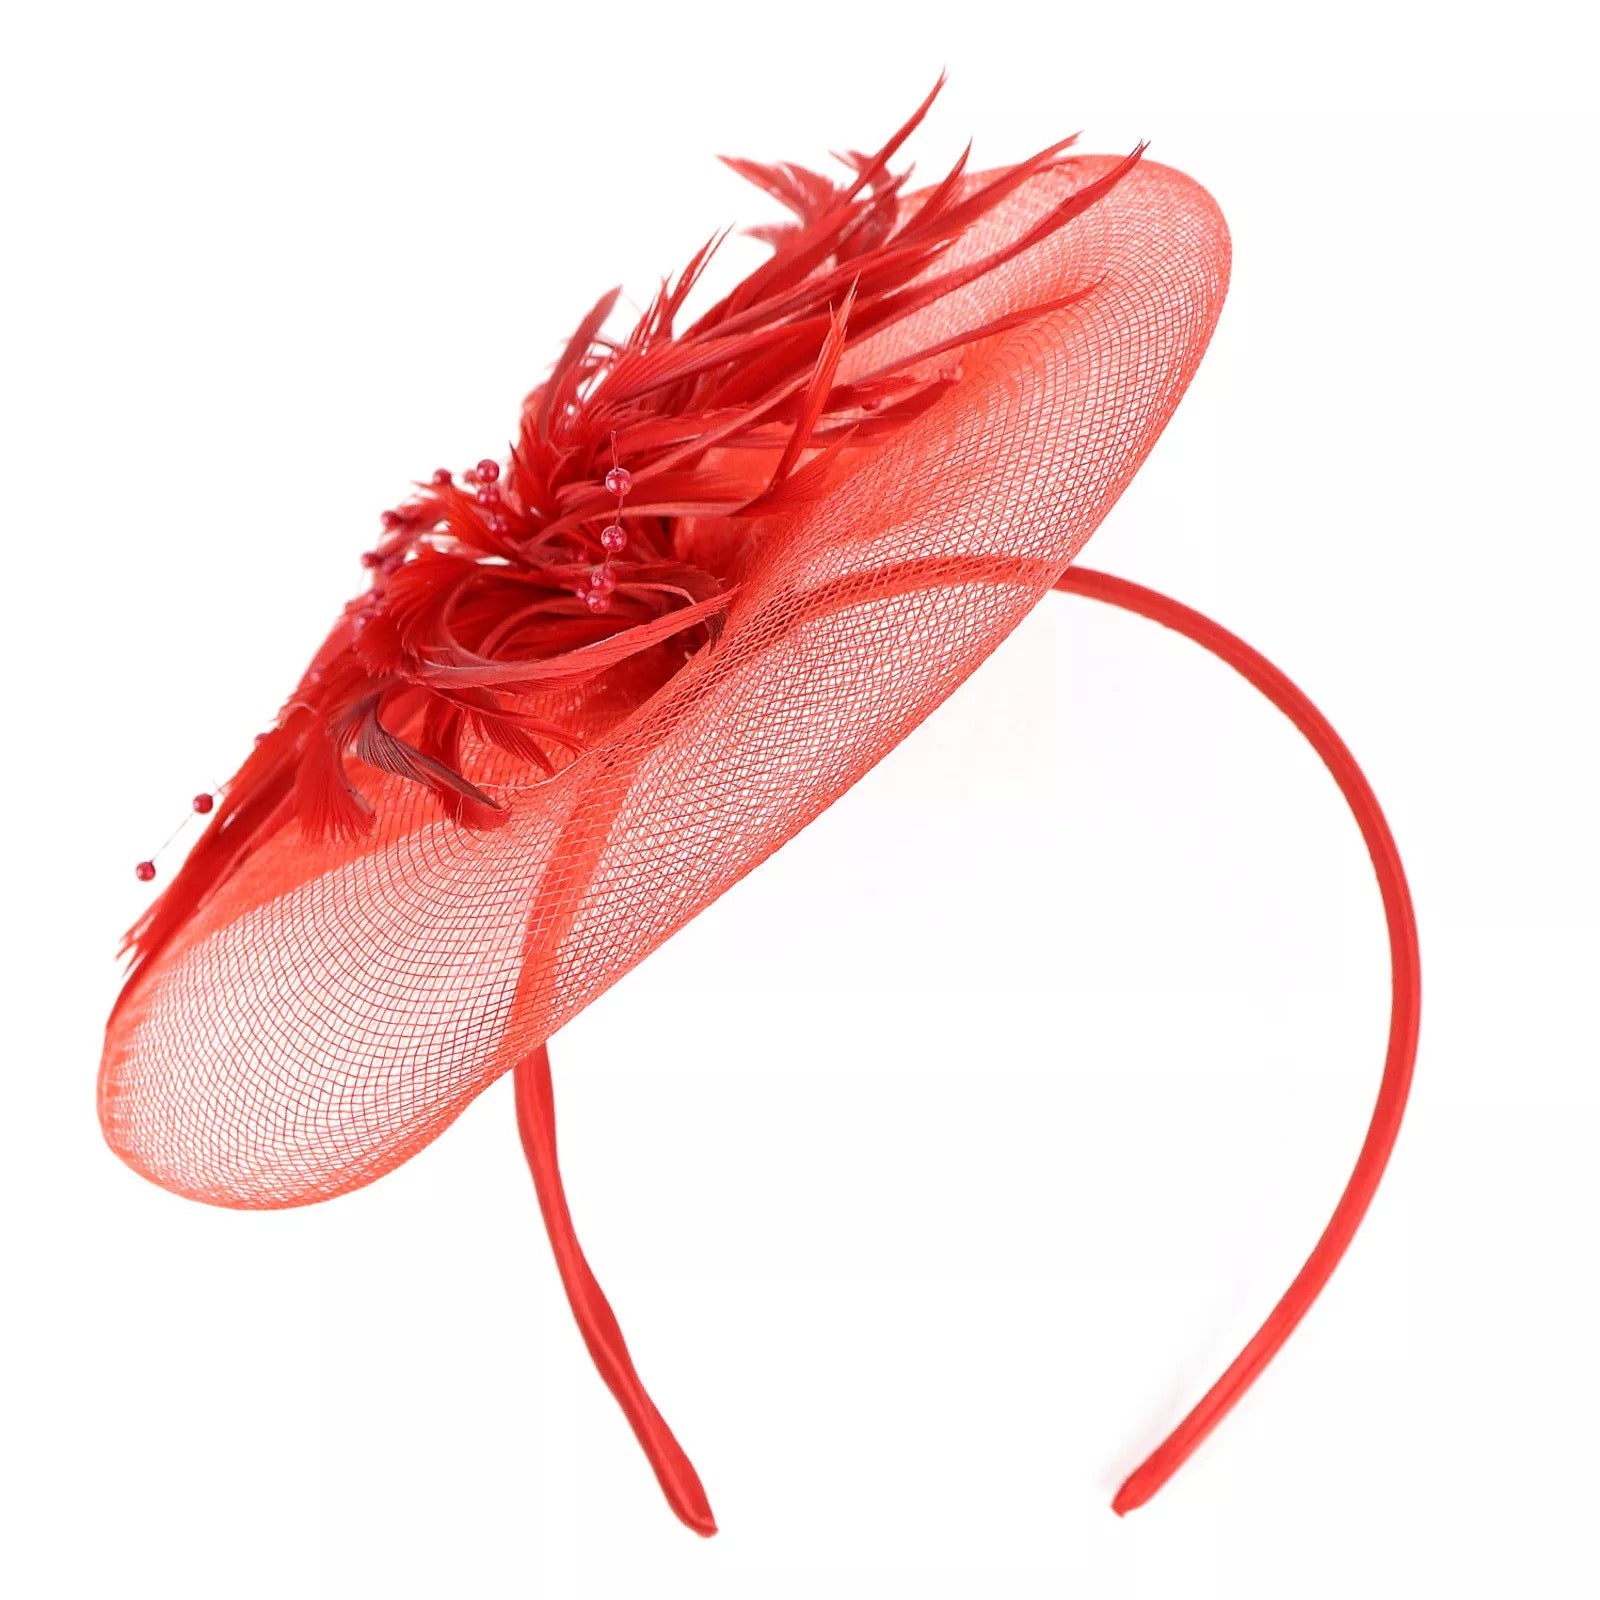 Crinoline and Feather Headband Fascinator - Red